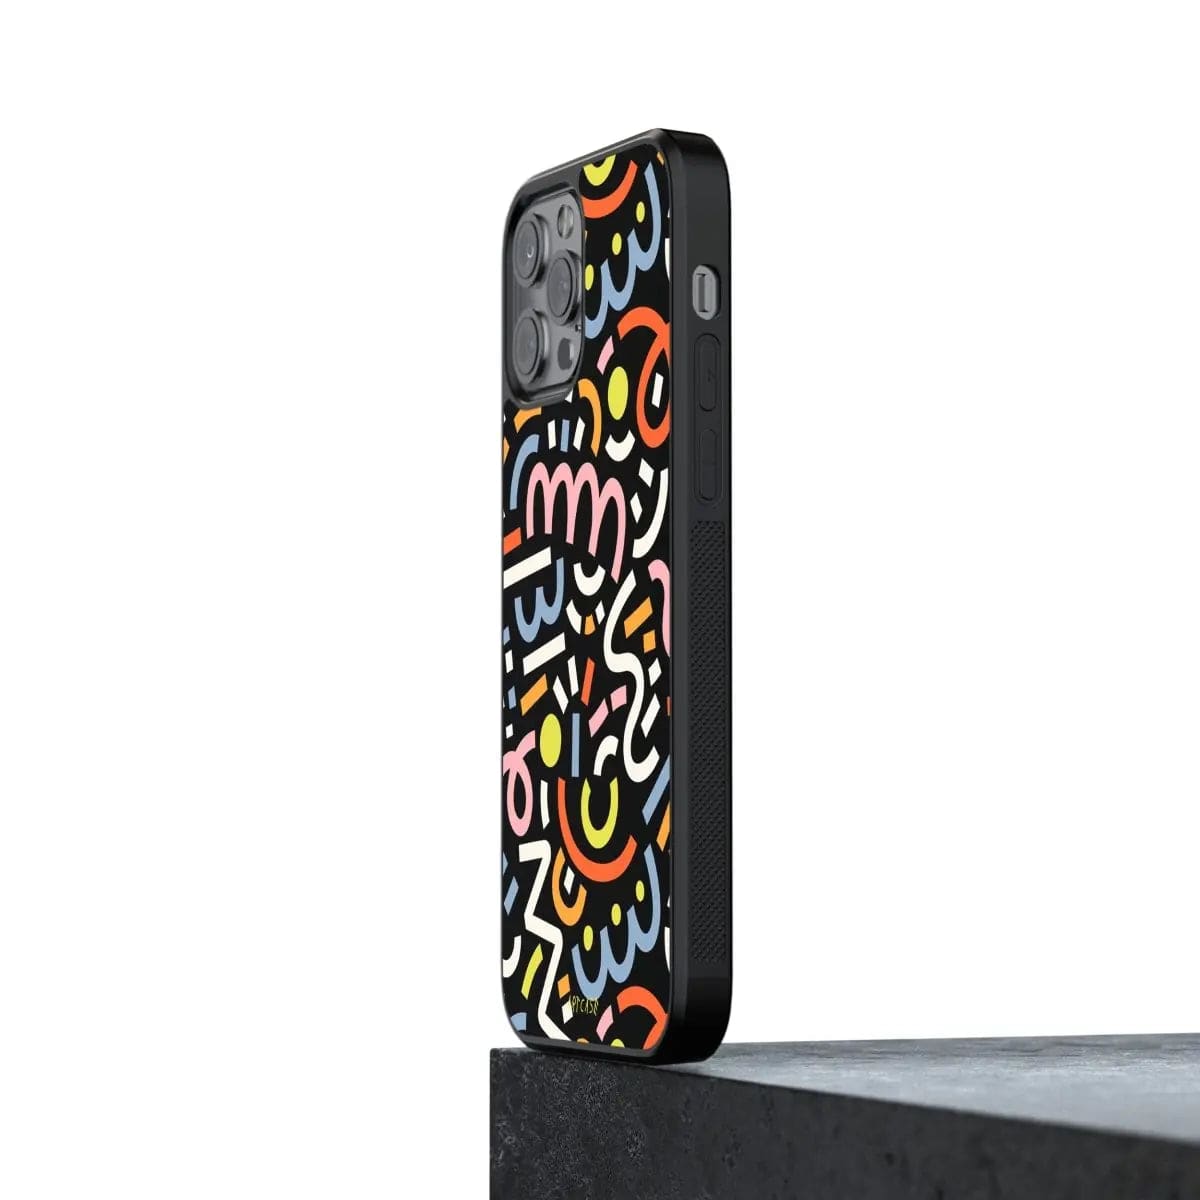 Phone case "Multicolored patterns" - Artcase